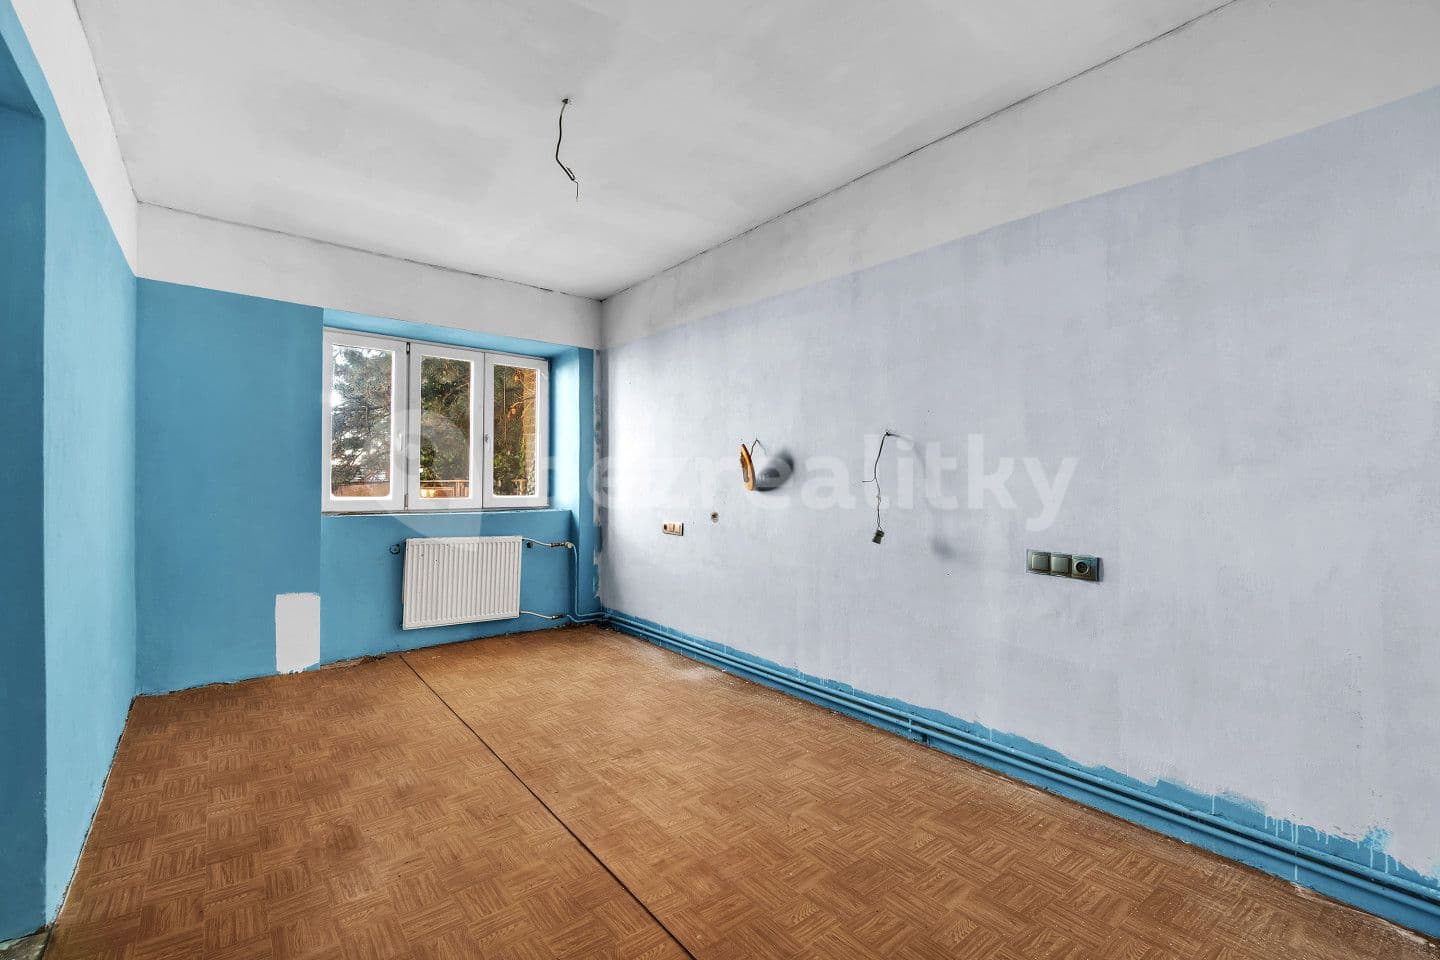 Predaj bytu 3-izbový 98 m², Čáslavská, Heřmanův Městec, Pardubický kraj